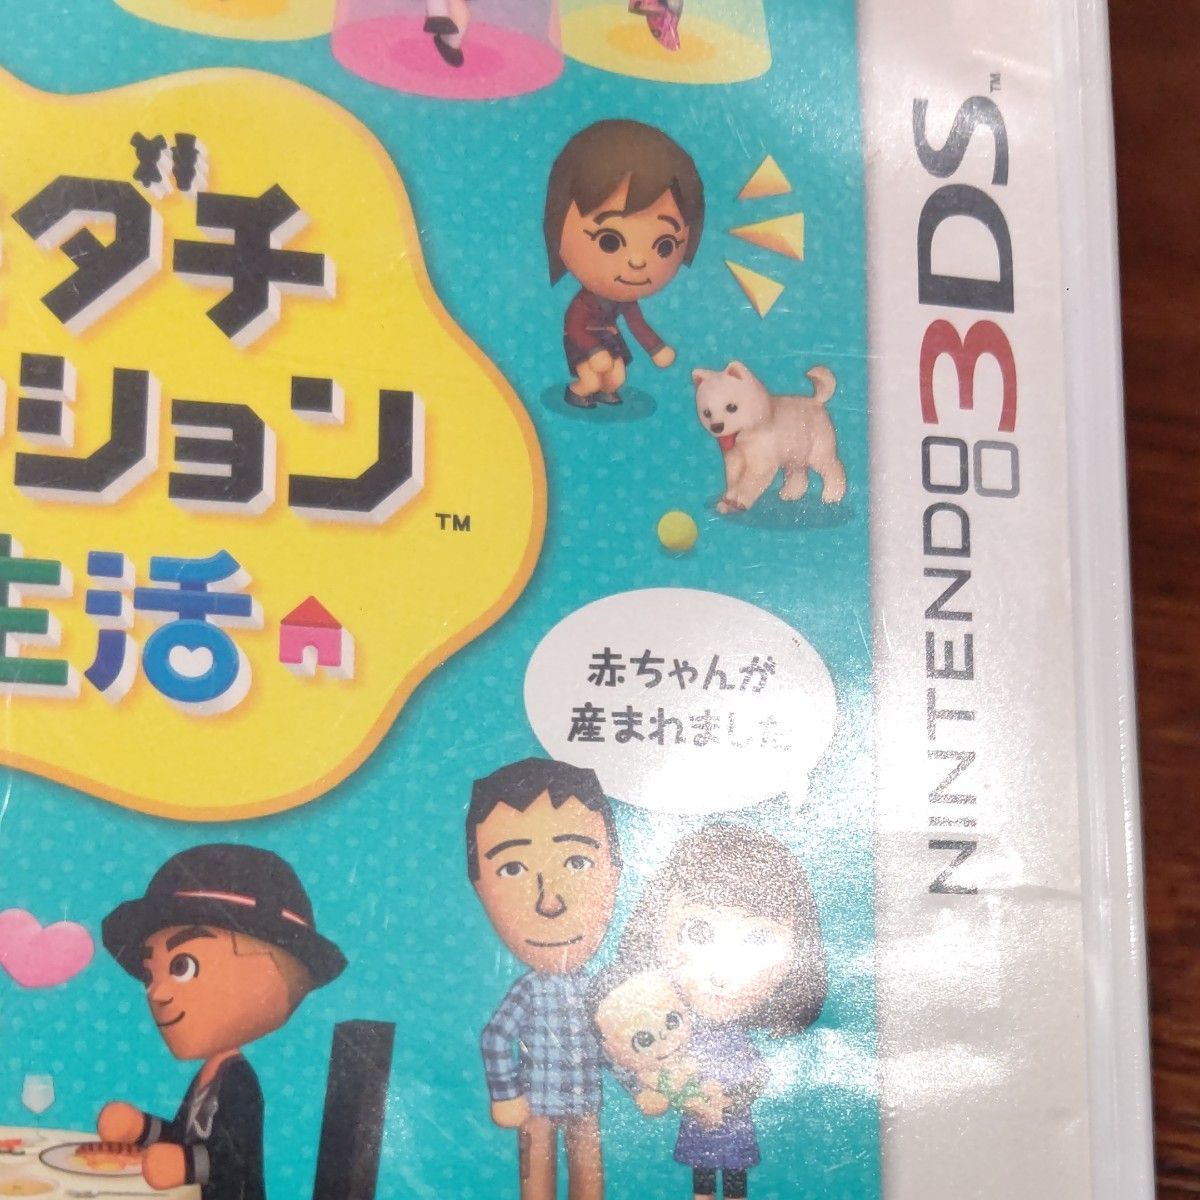 3DS トモダチコレクション 新生活 ソフト